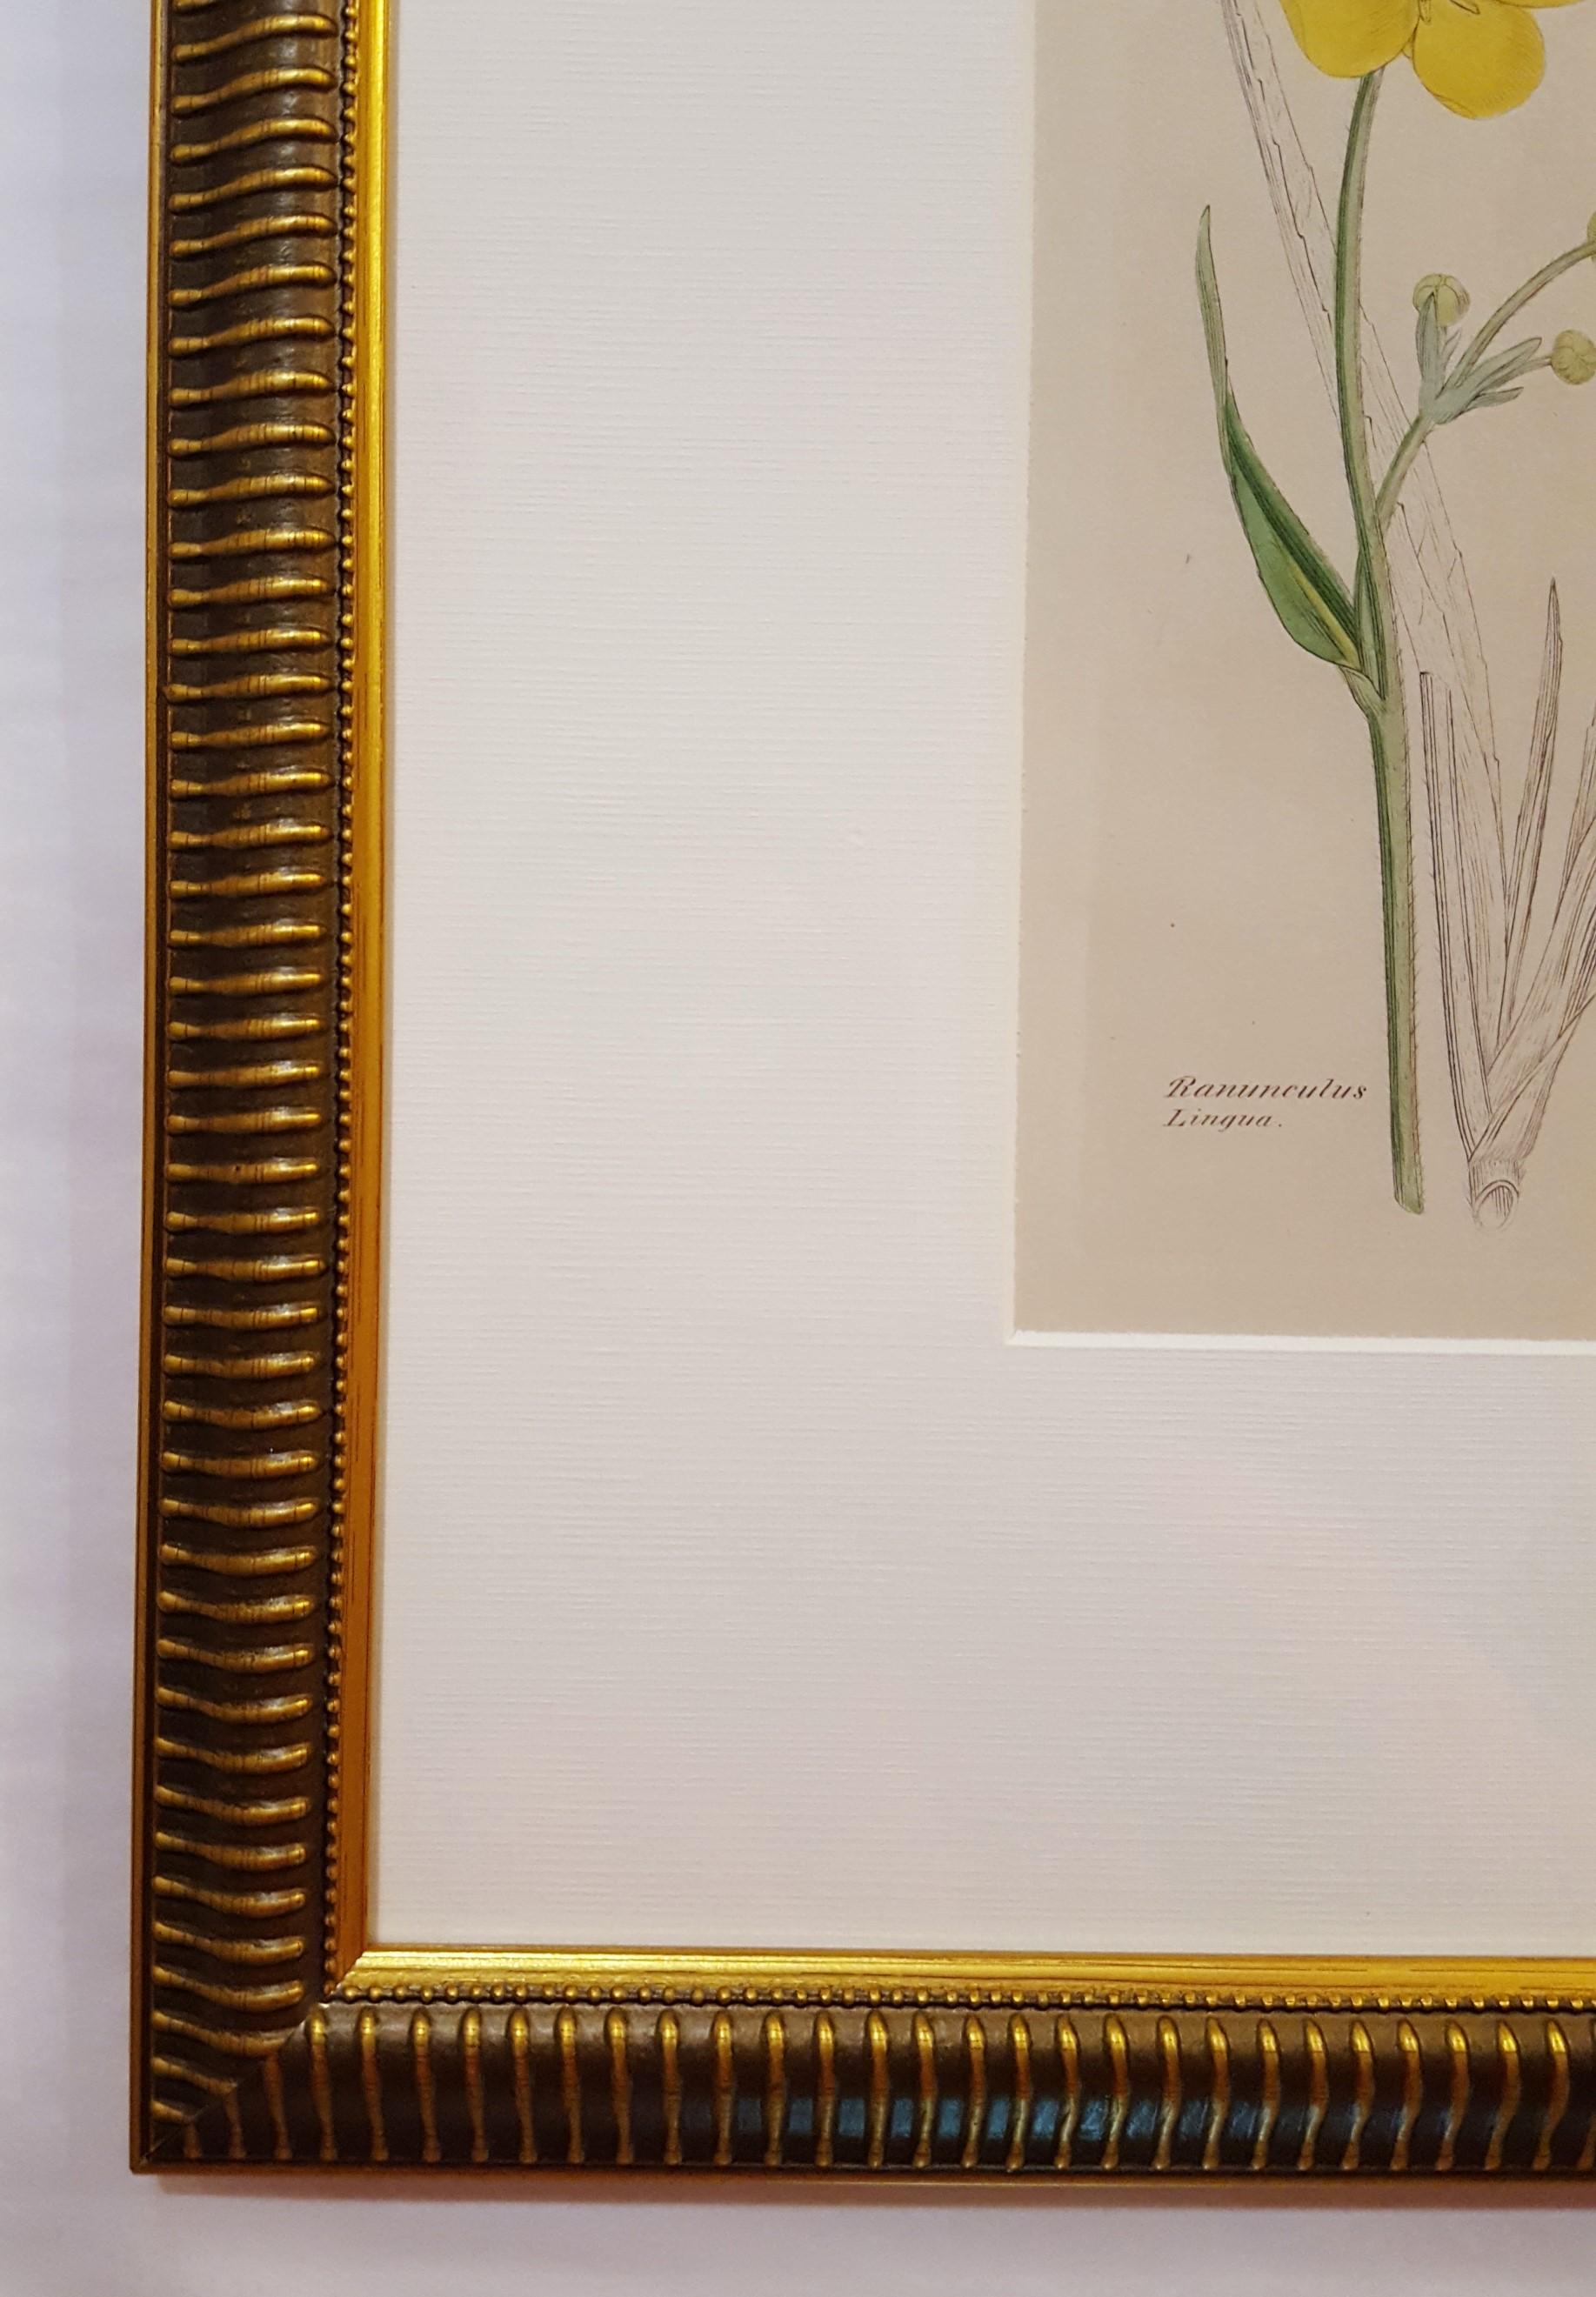 Ranunculus Lingua (grande salicorne) /// Botanique James Sowerby Fleur en vente 1